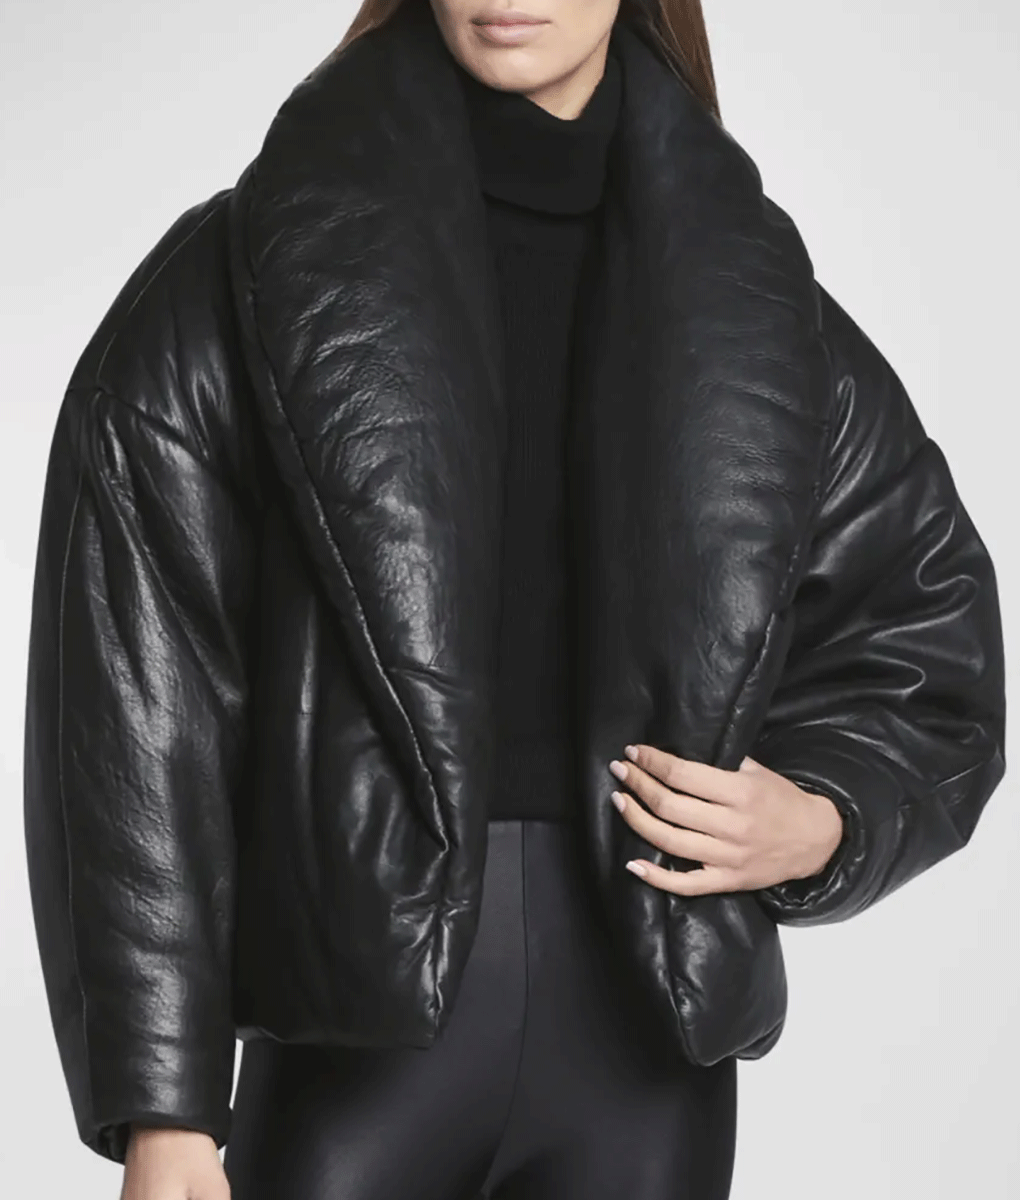 Mariah Carey Black Leather Jacket (5)